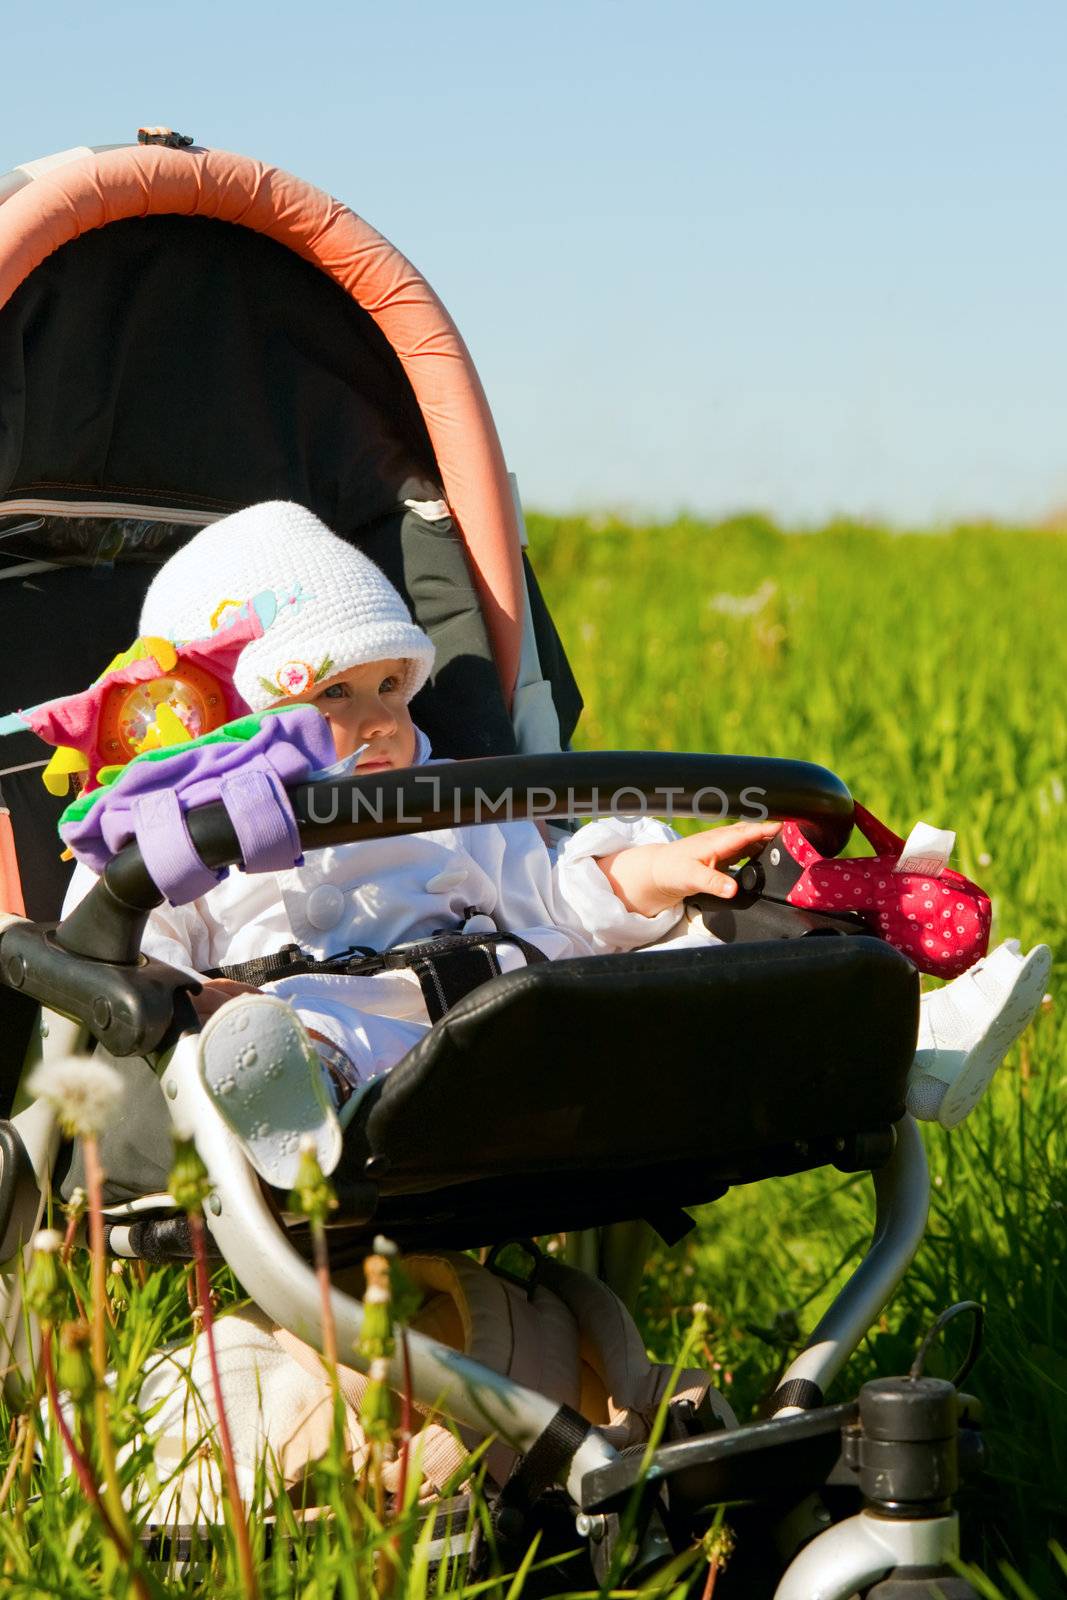 Infant in Stroller by naumoid